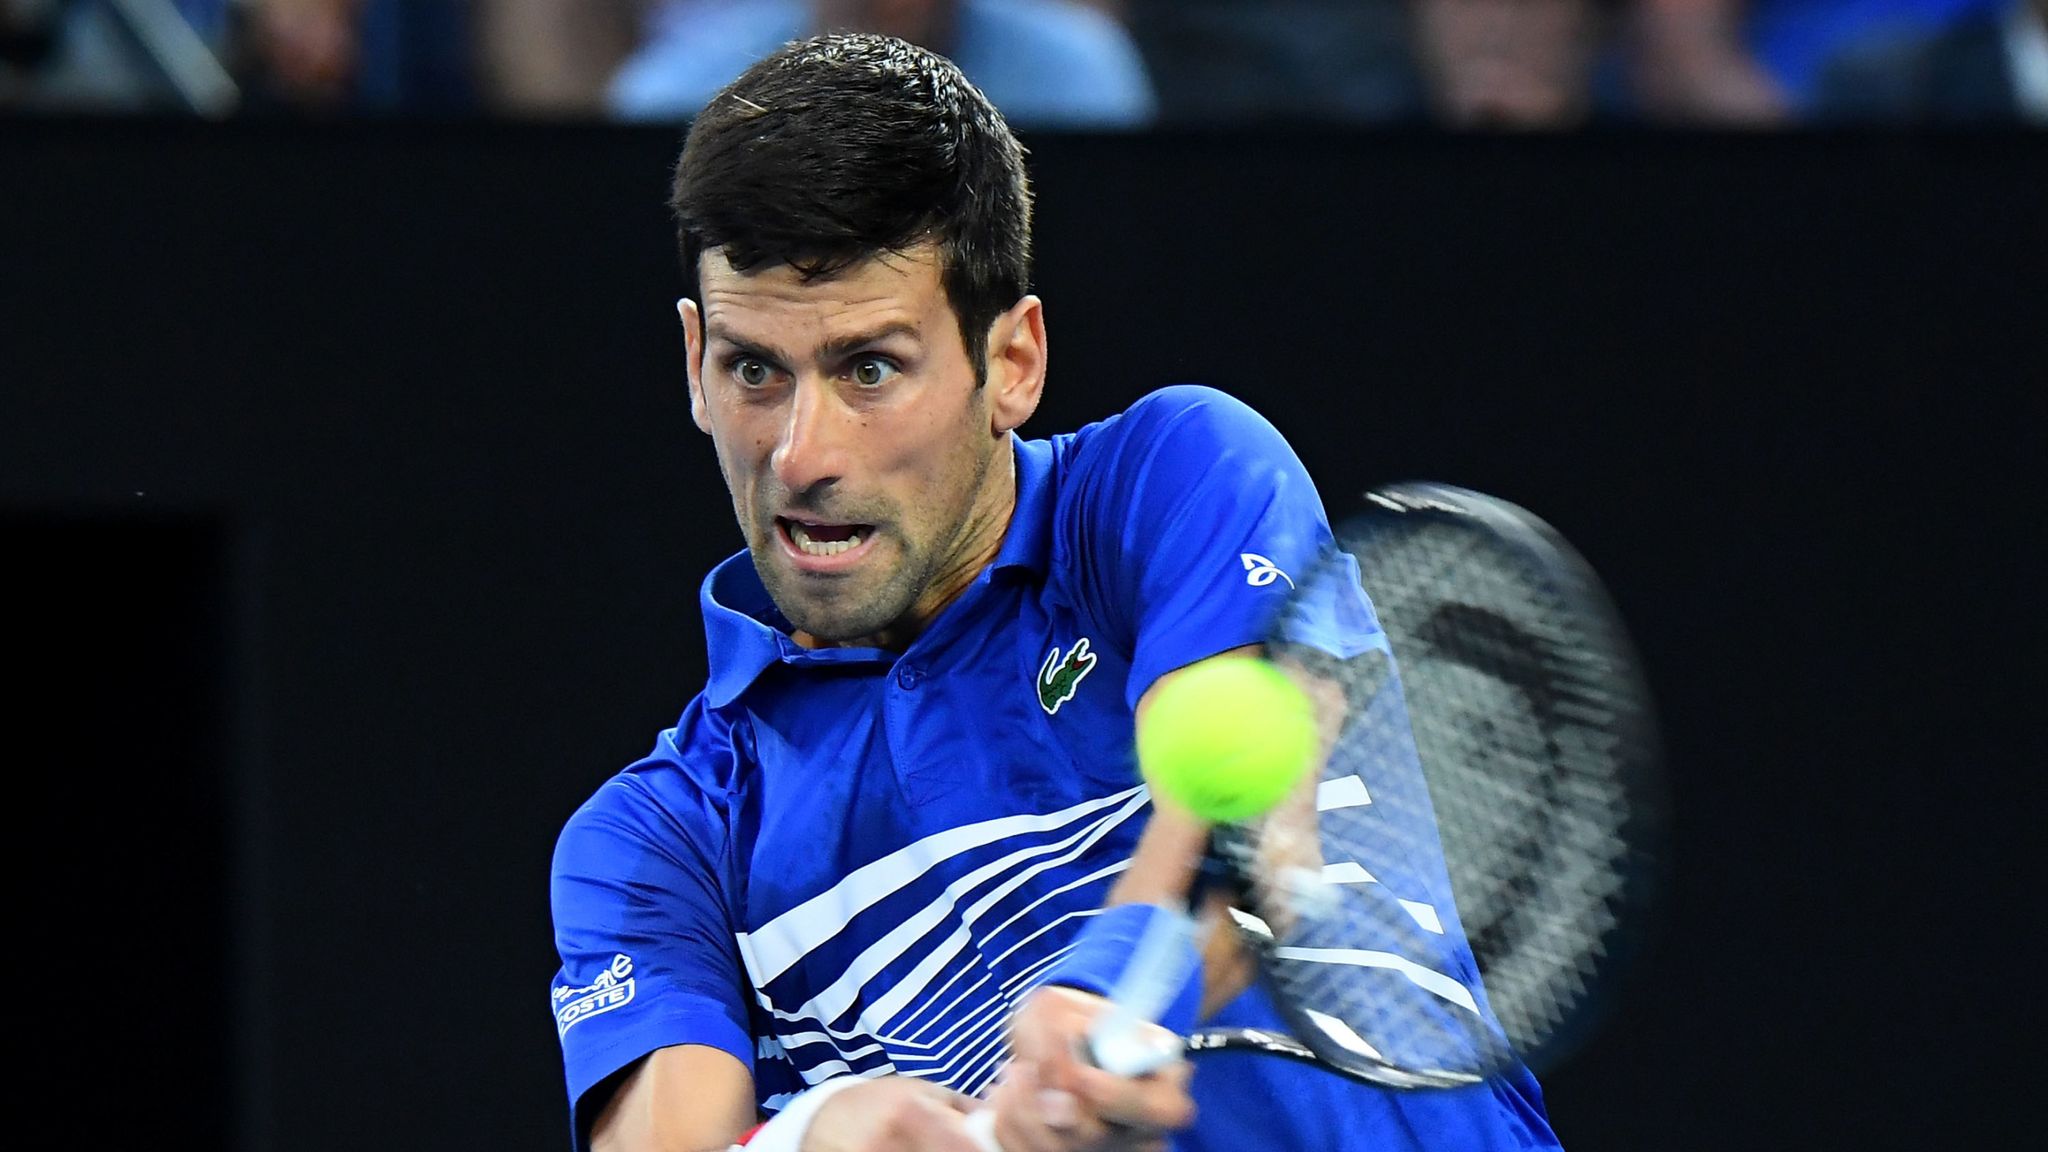 Novak Djokovic crushes Lucas Pouille to Australian Open men's final | Tennis News | Sky Sports